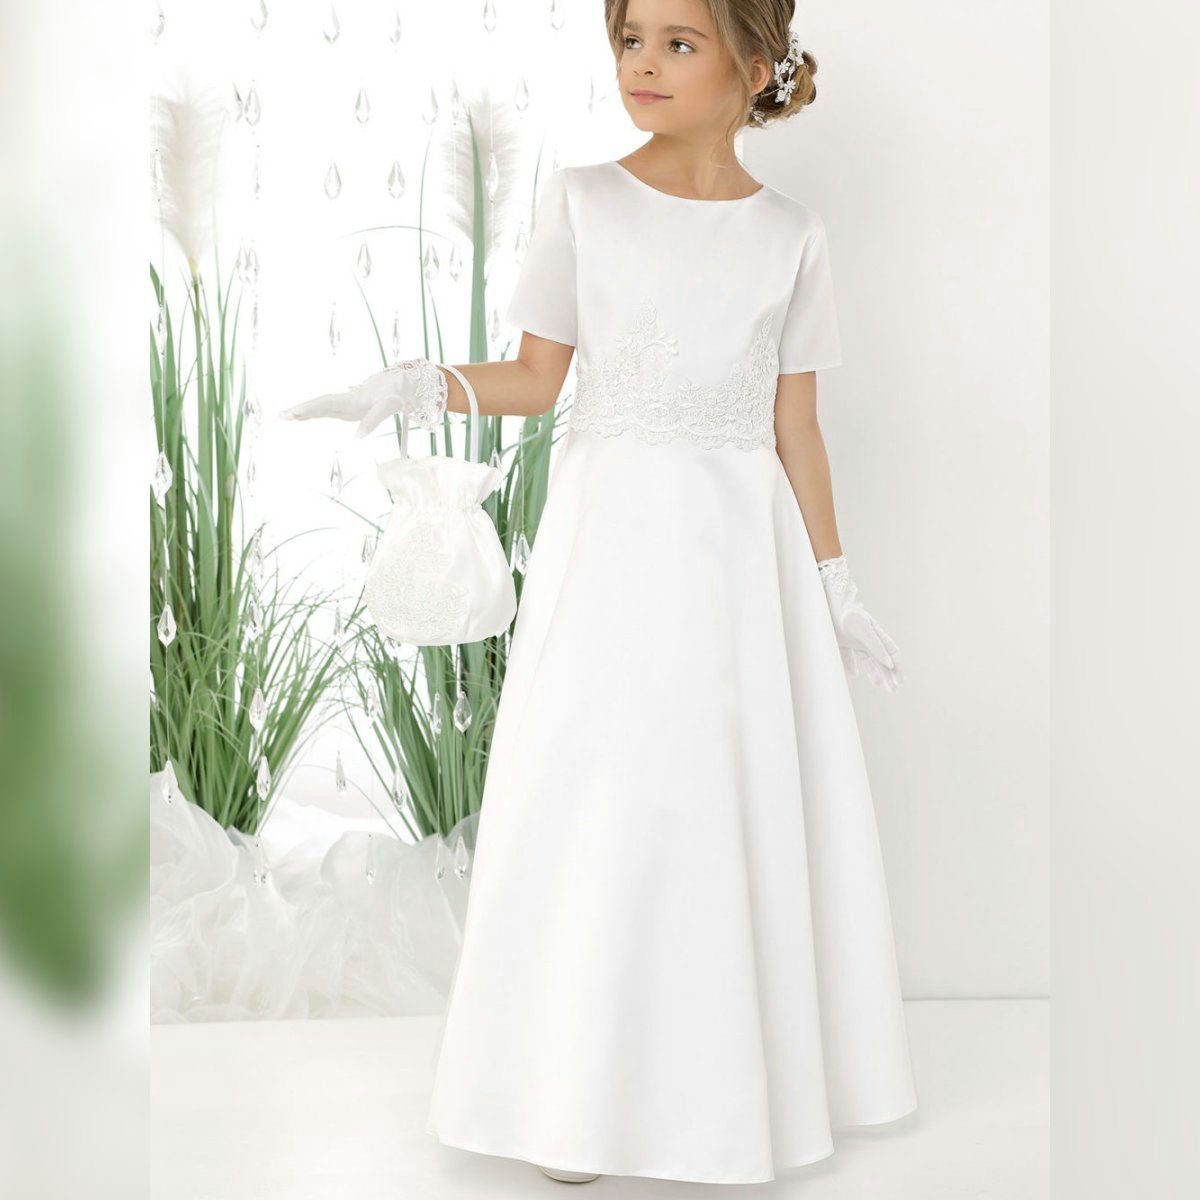 Dalary Kommunionkleid Dalary Blumenmädchenkleid Weiß DK-202 Partykleid